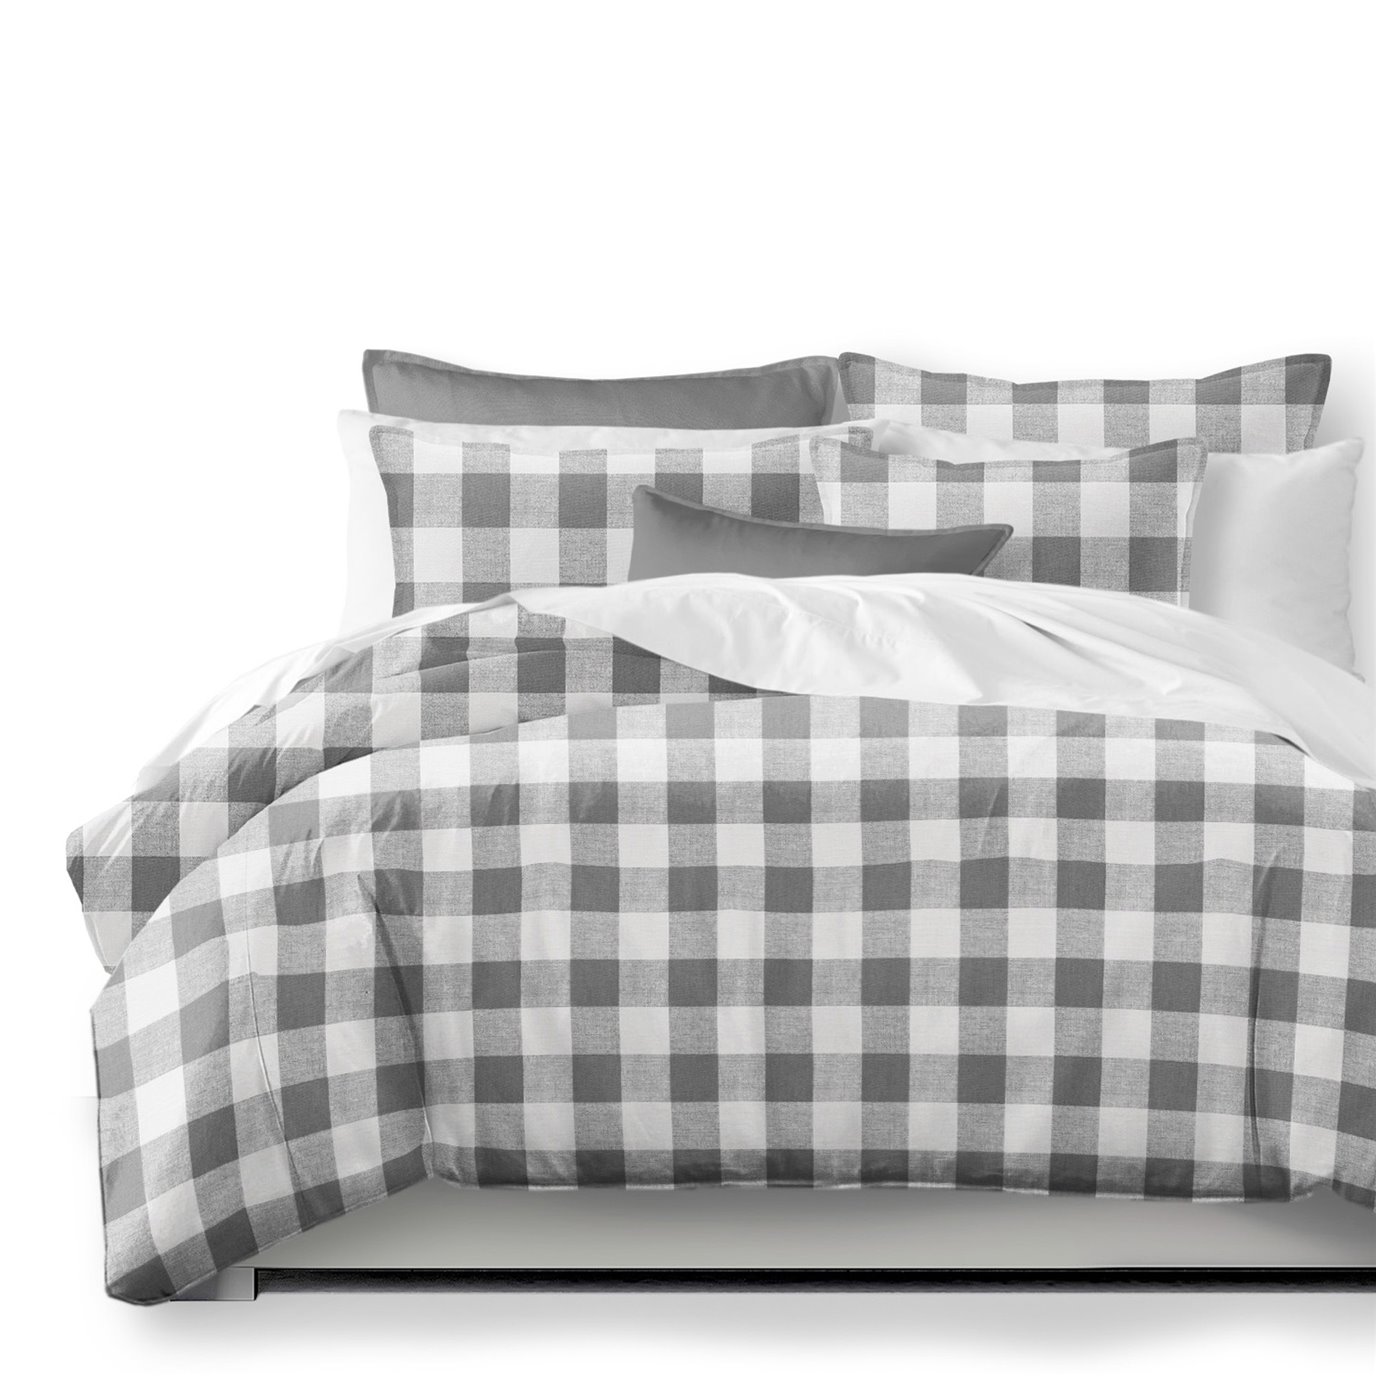 Lumberjack Check Gray/White Comforter and Pillow Sham(s) Set - Size King / California King